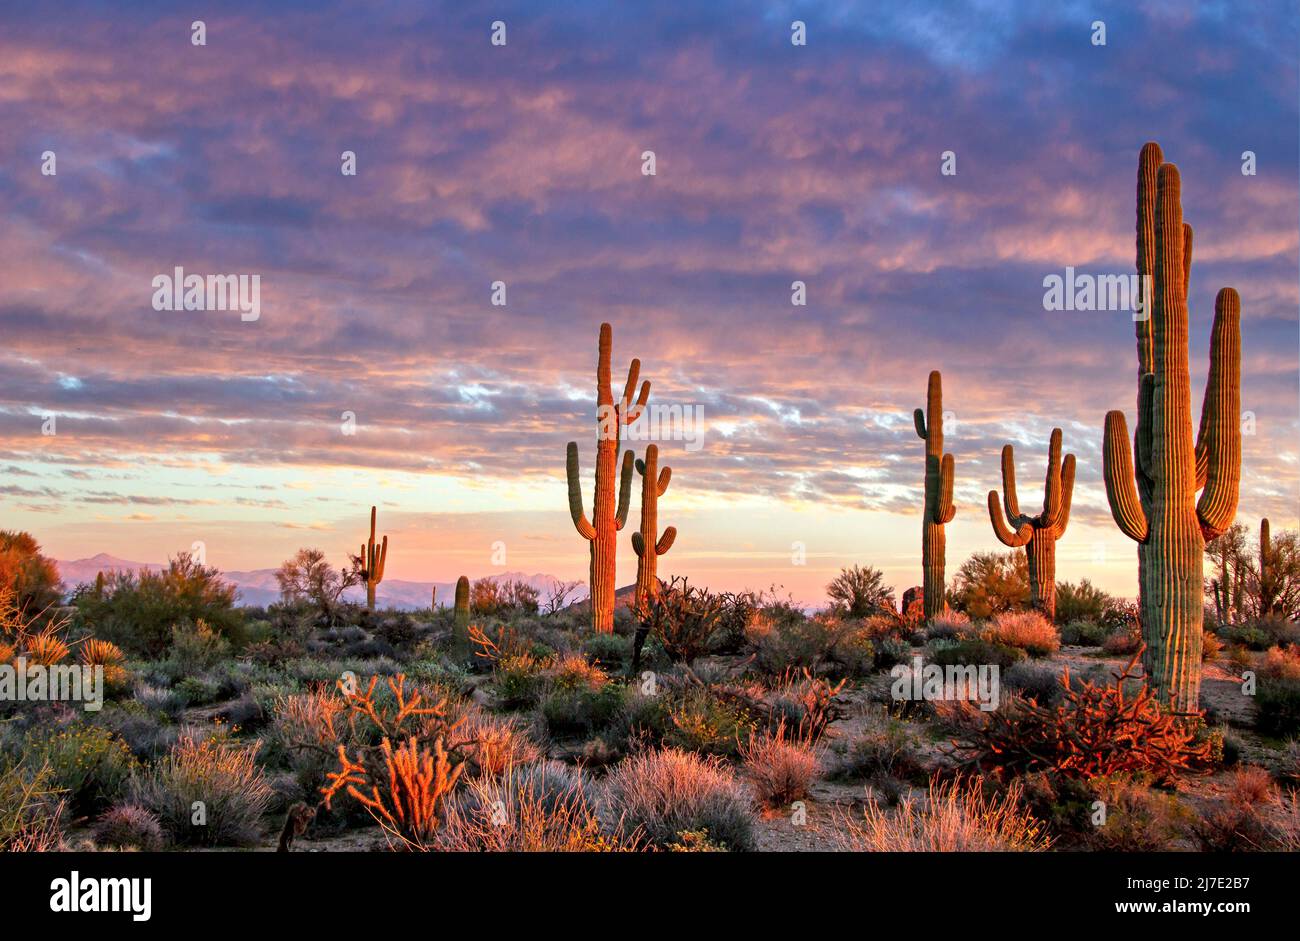 Sonoran Desert Landscape In AZ At Dusk Time Stock Photo